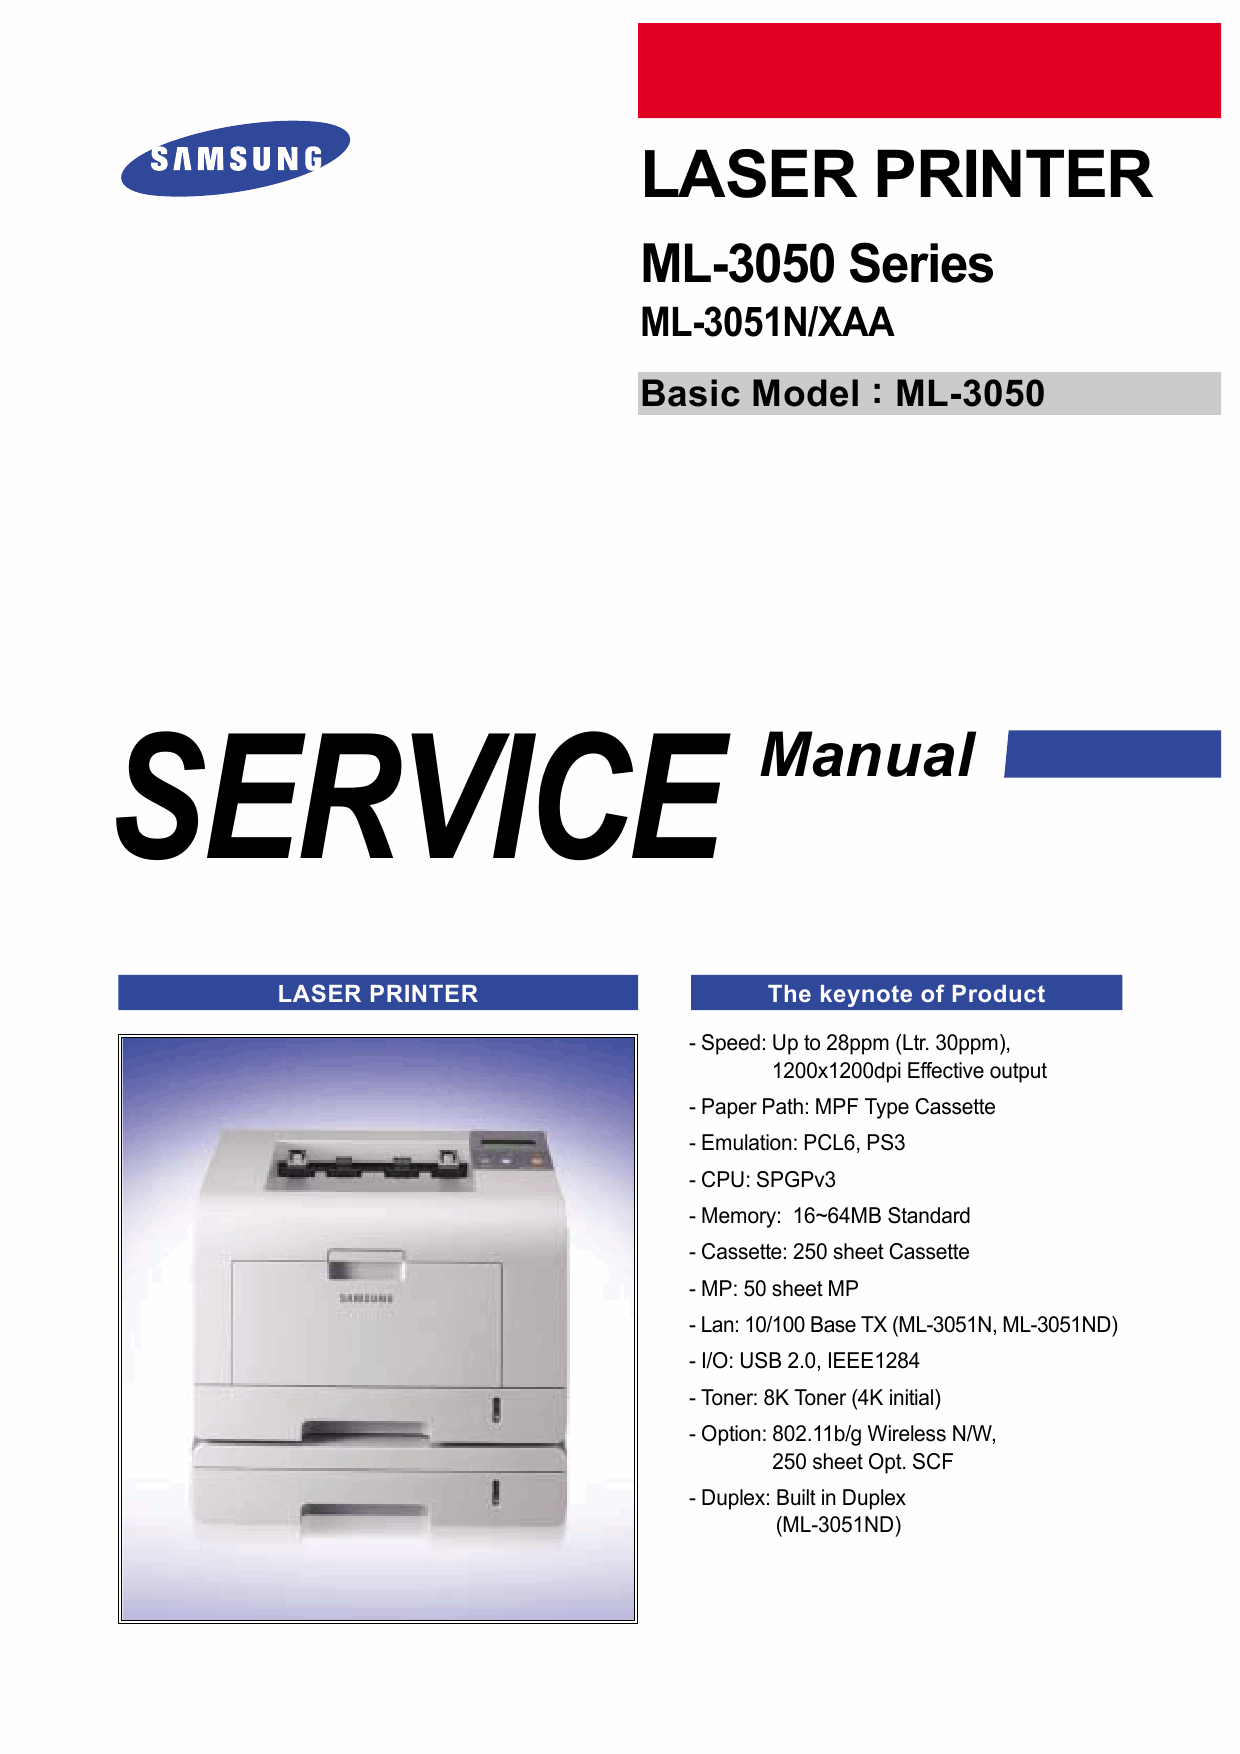 Samsung Laser-Printer ML-3050 3051N Parts and Service Manual-1